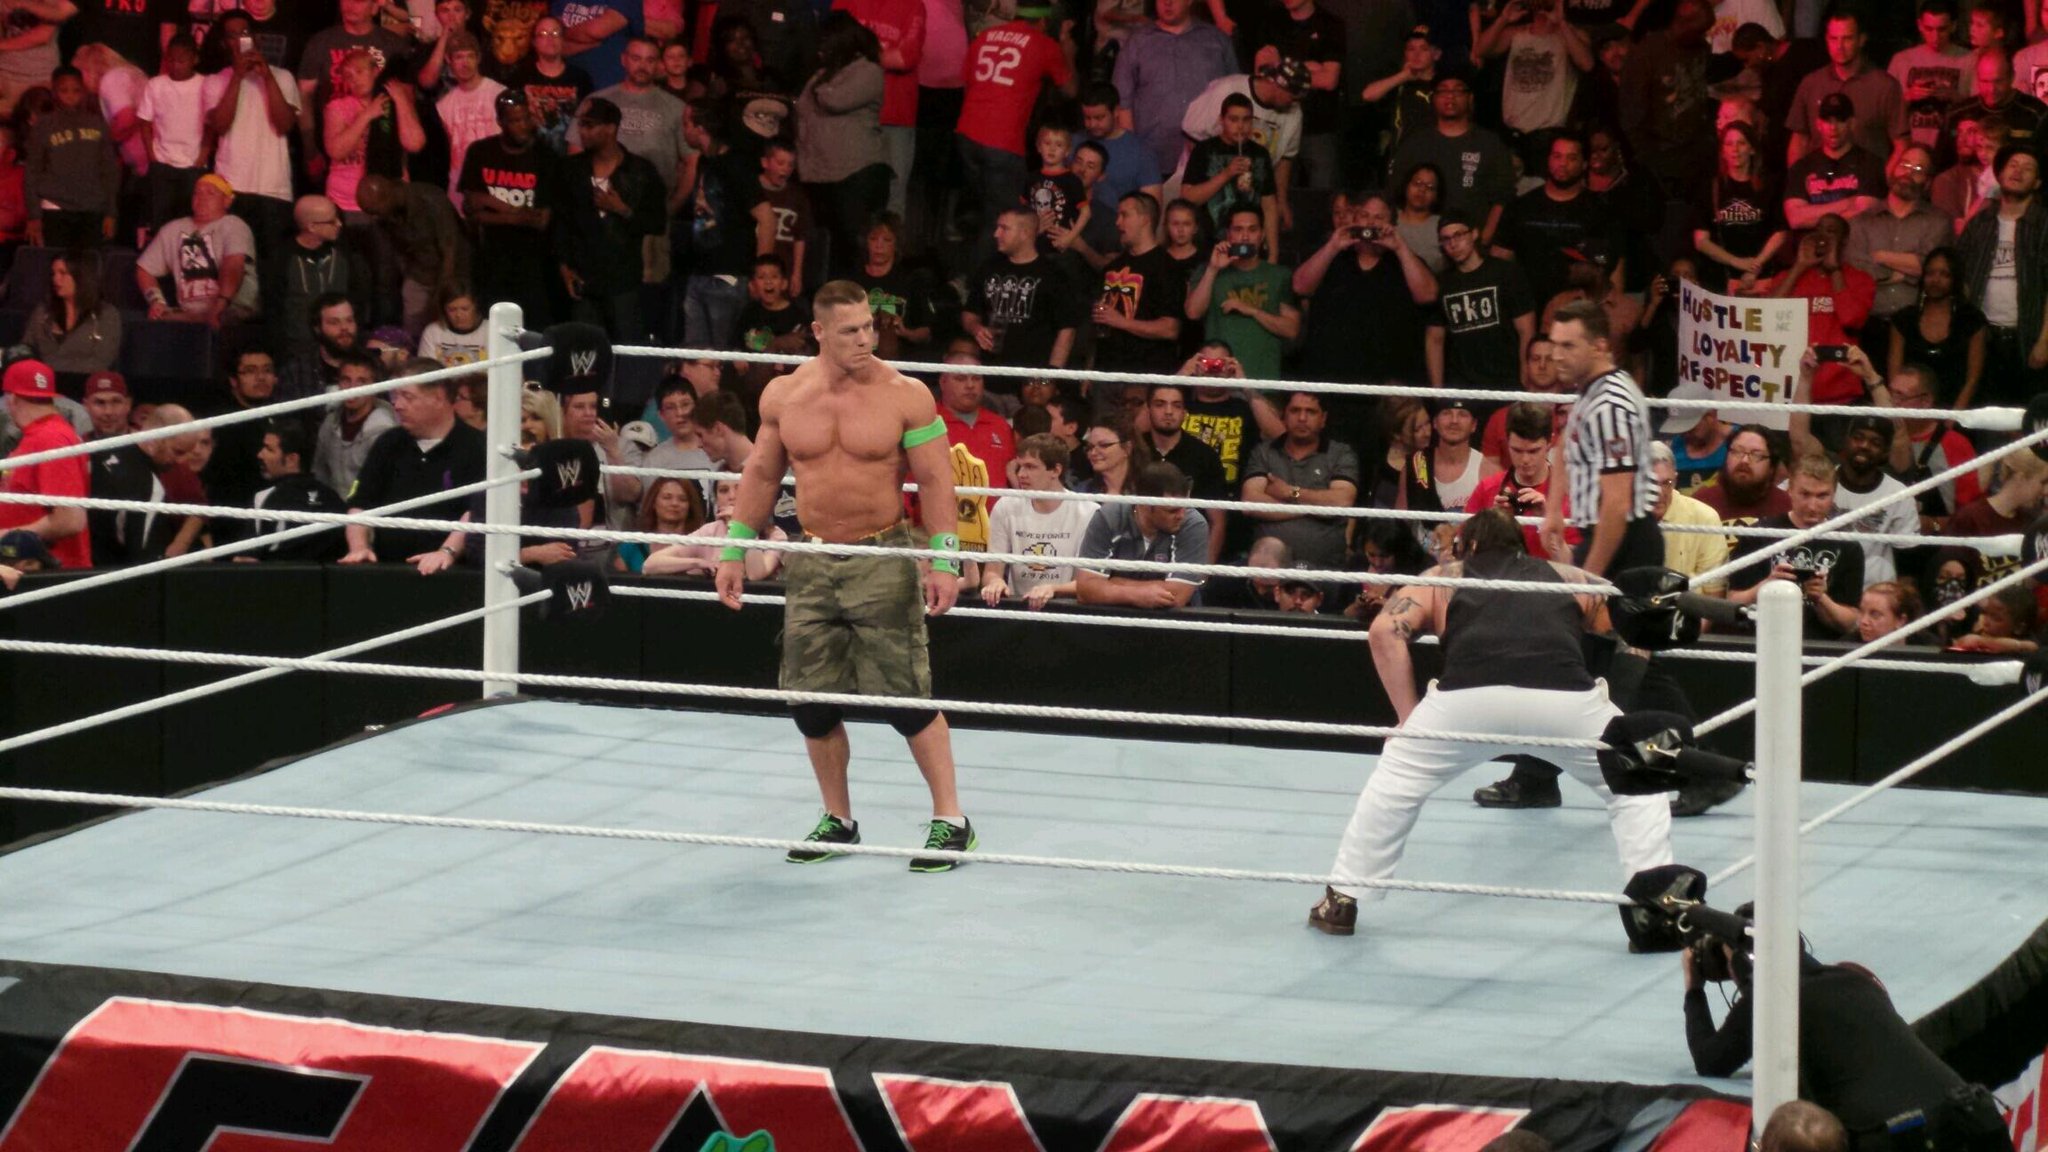 John Cena vs. Bray Wyatt - Dark Match